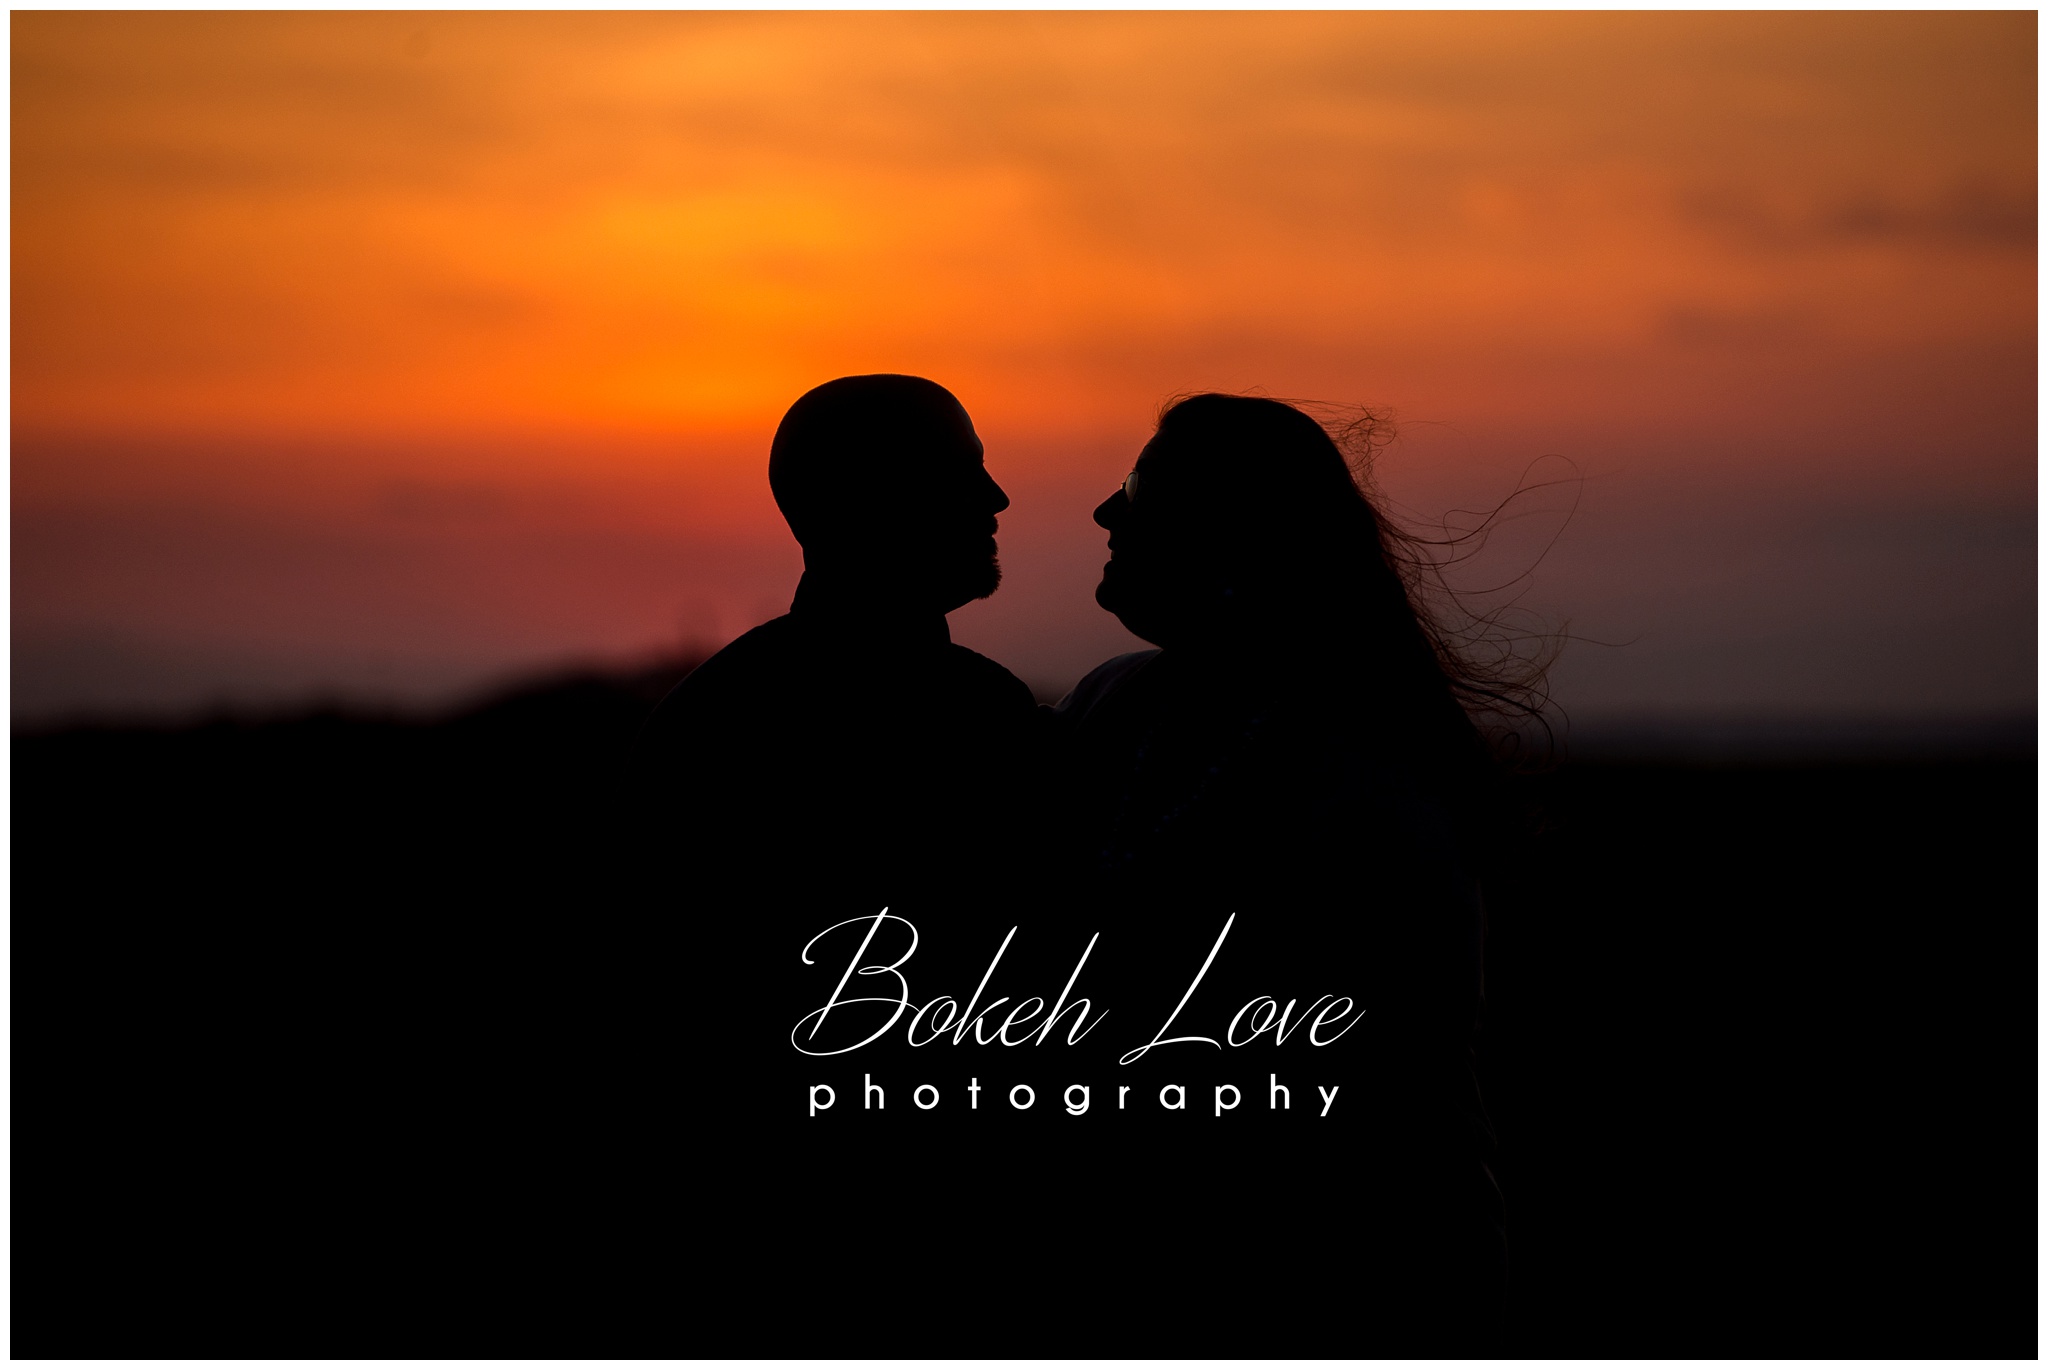 Bokeh_Love_Photography_Galloway_Professional_Photographer_4286.jpg